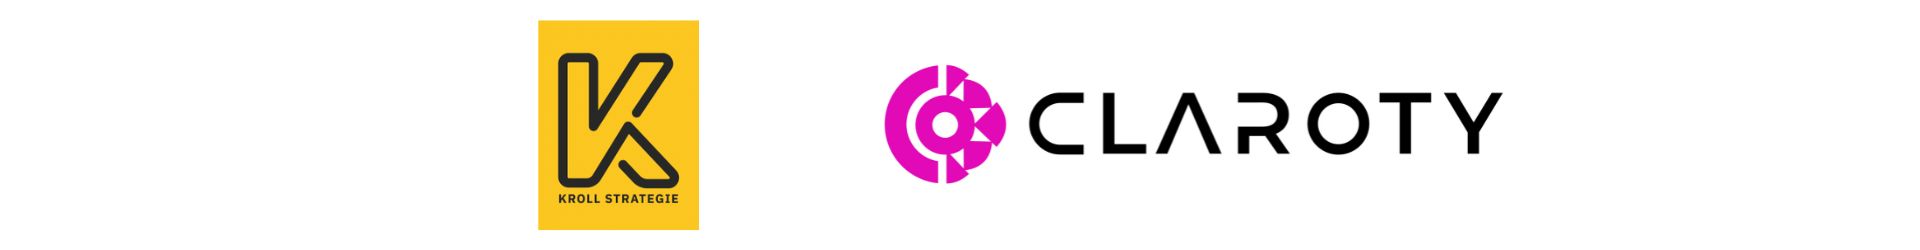 Logo Kroll und Claroty